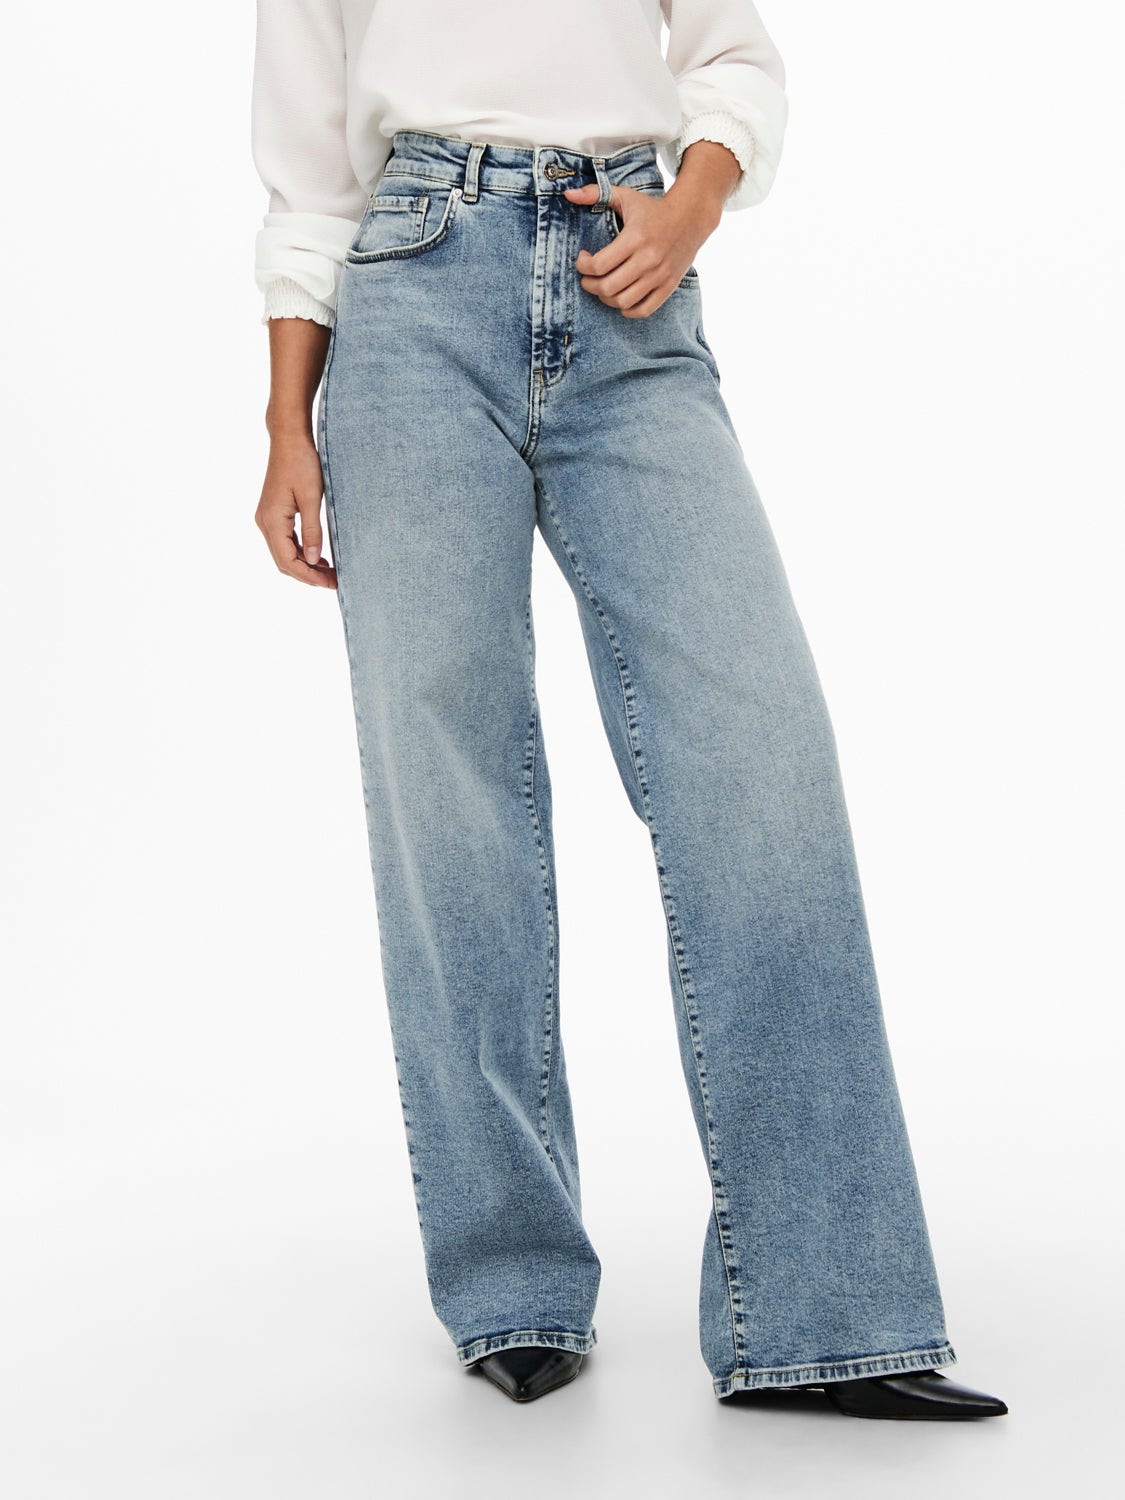 Etienne Aigner Hoge taille jeans lichtgrijs casual uitstraling Mode Spijkerbroeken Hoge taille jeans 